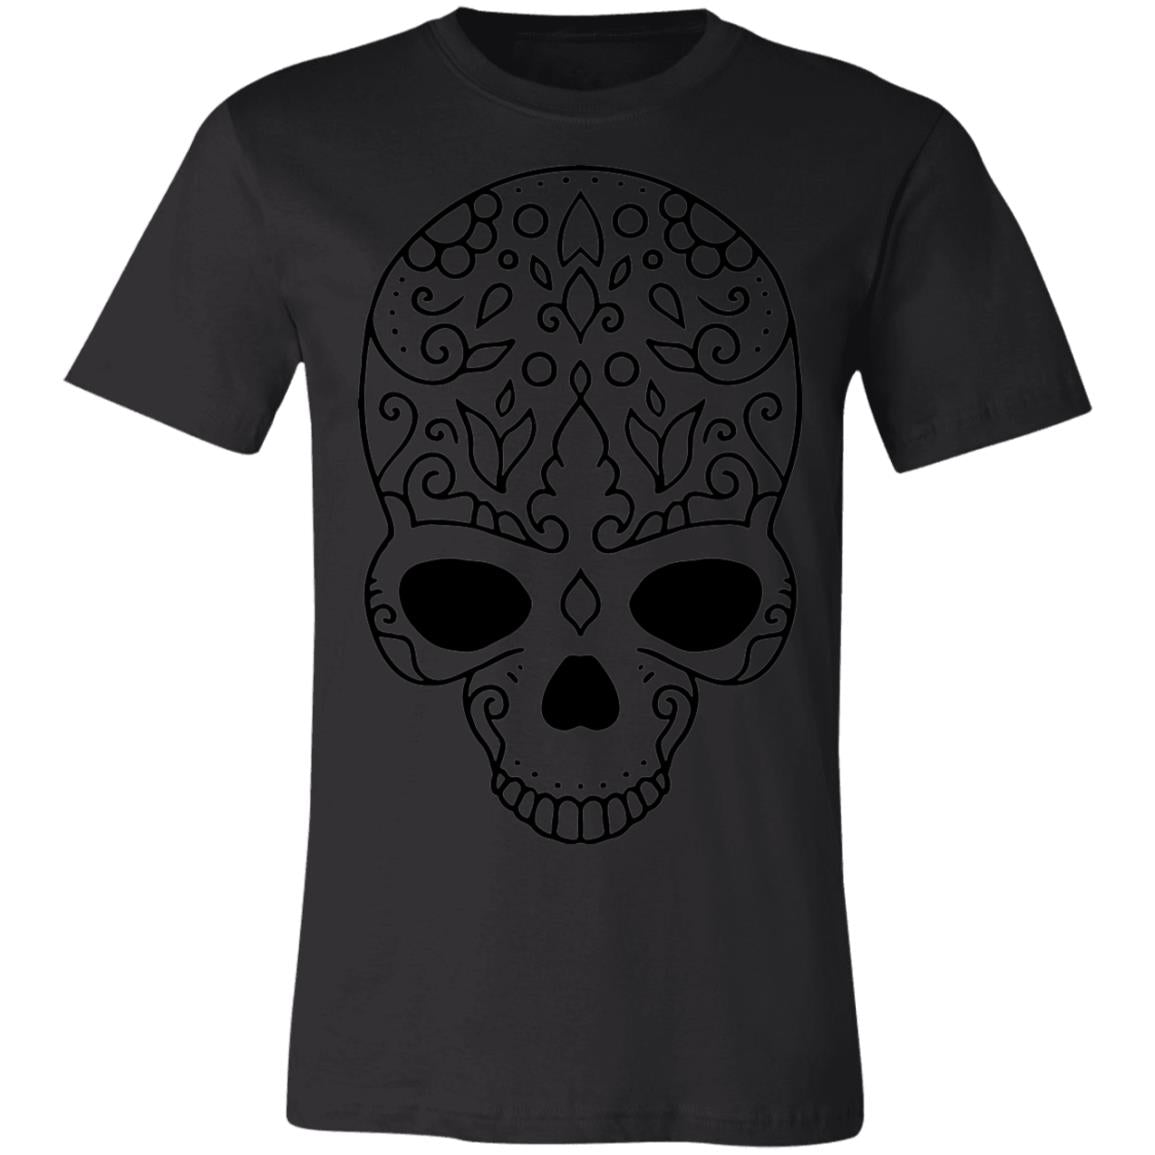 Skull 63 Santa Muerte Shirt-Express Your Love Gifts